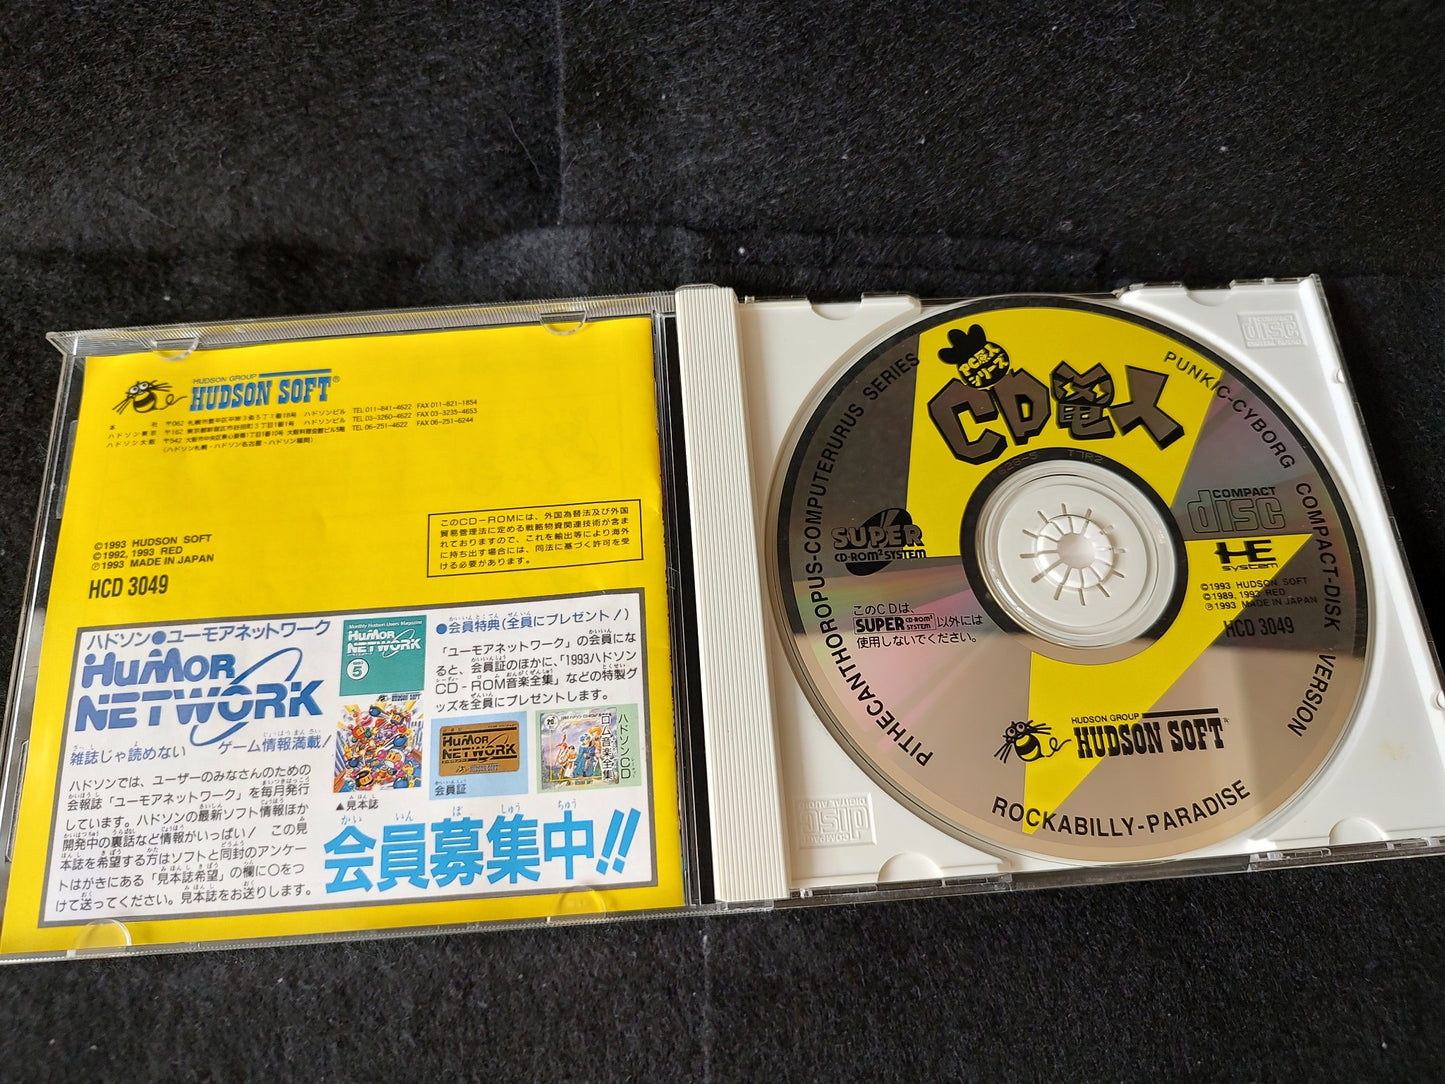 CD Denjin ( Genjin Series Super Air Zonk Rockabilly-Paradise) PC Engine CD-ROM